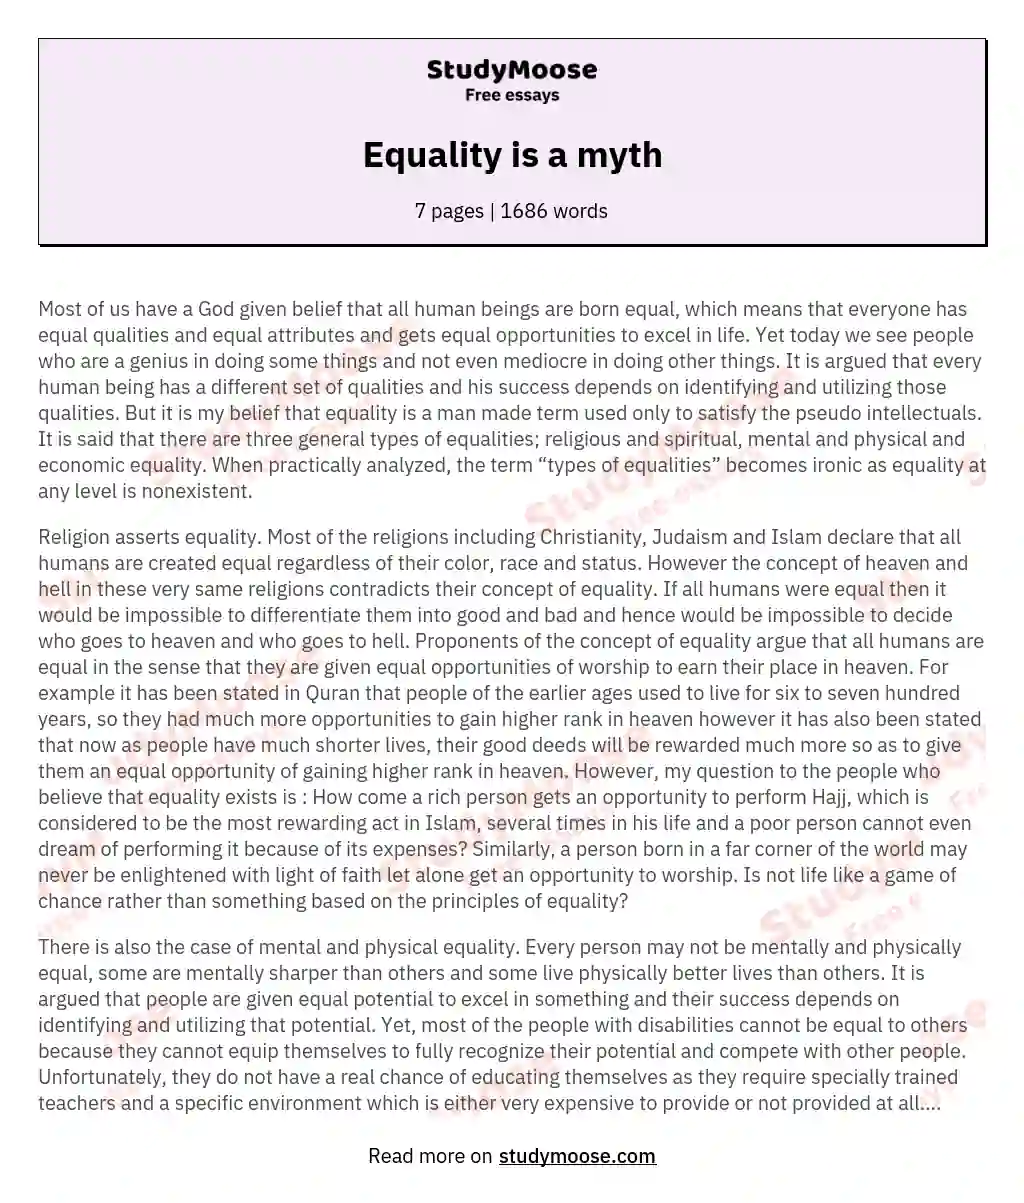 Equality is a myth essay